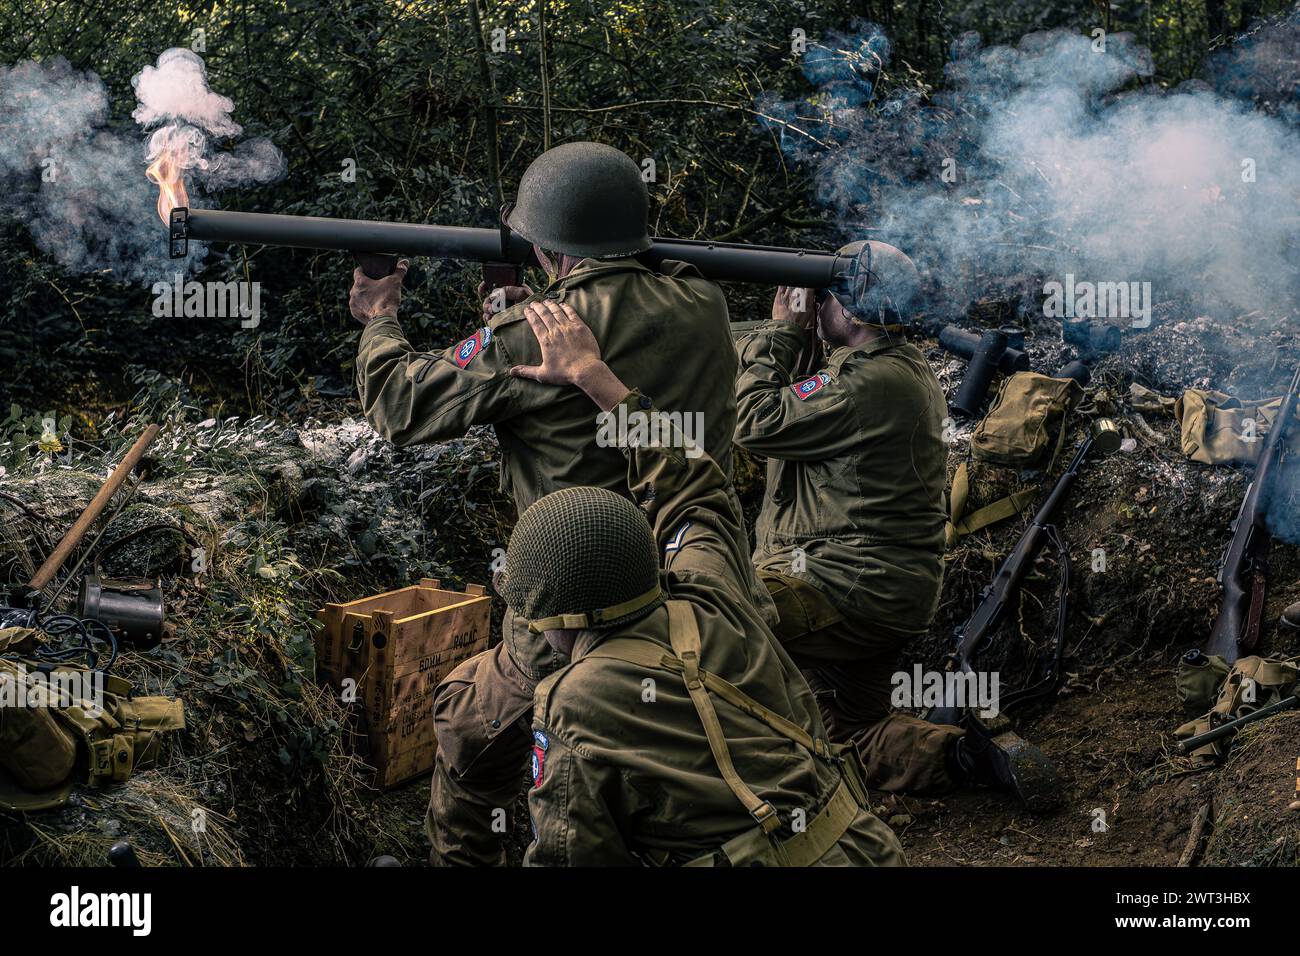 World war 2 US soldier reenactors firing a bazooka with flame and smoke Stock Photo